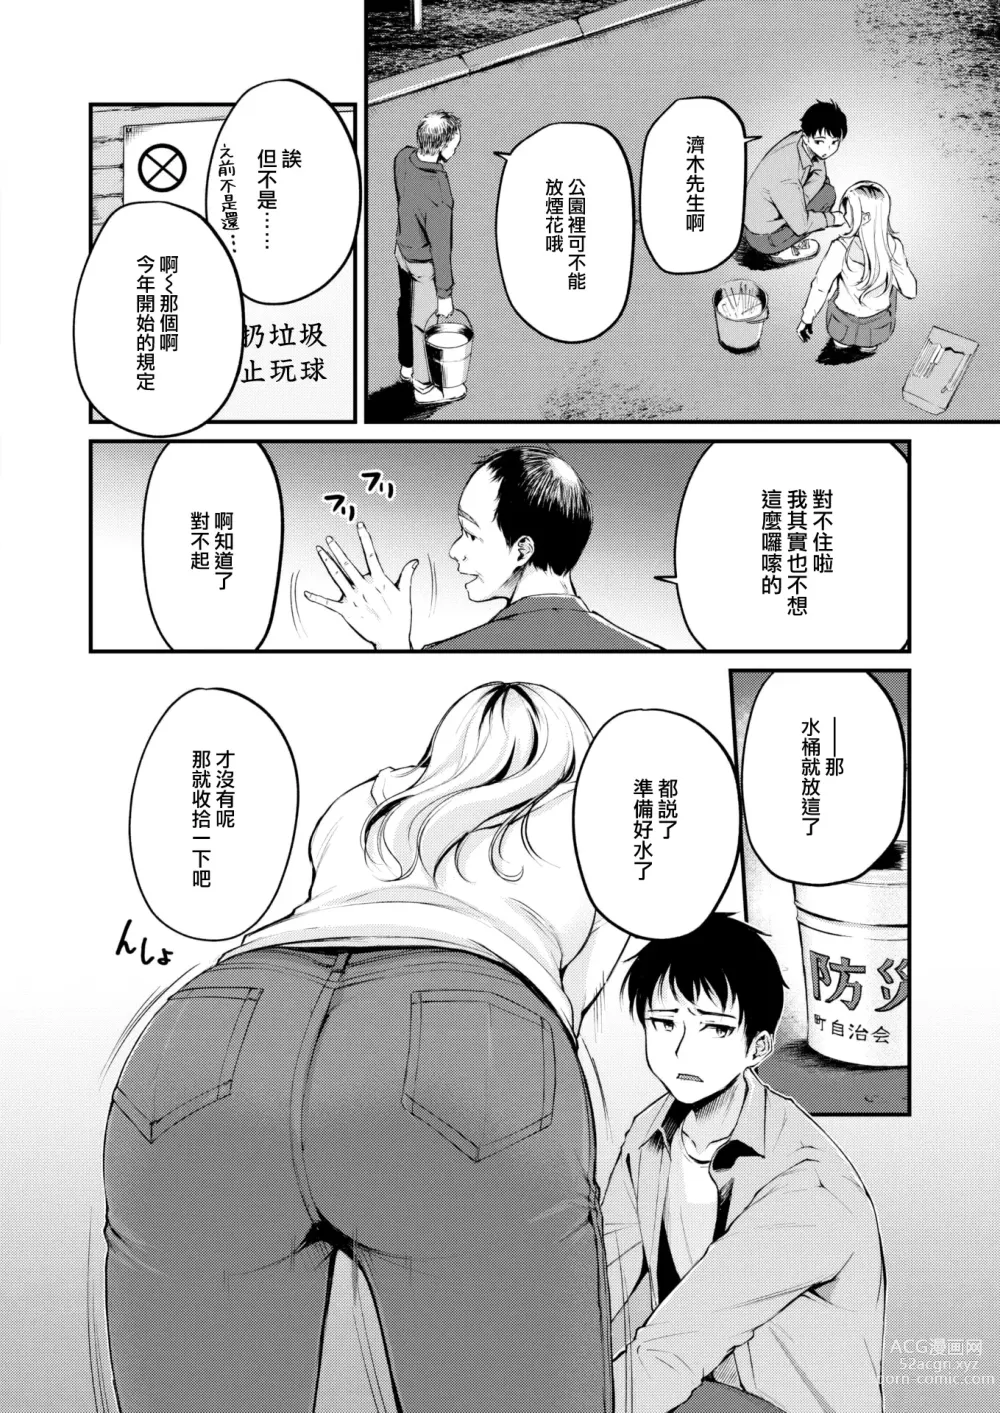 Page 5 of manga Senkou Hanabi no Koi